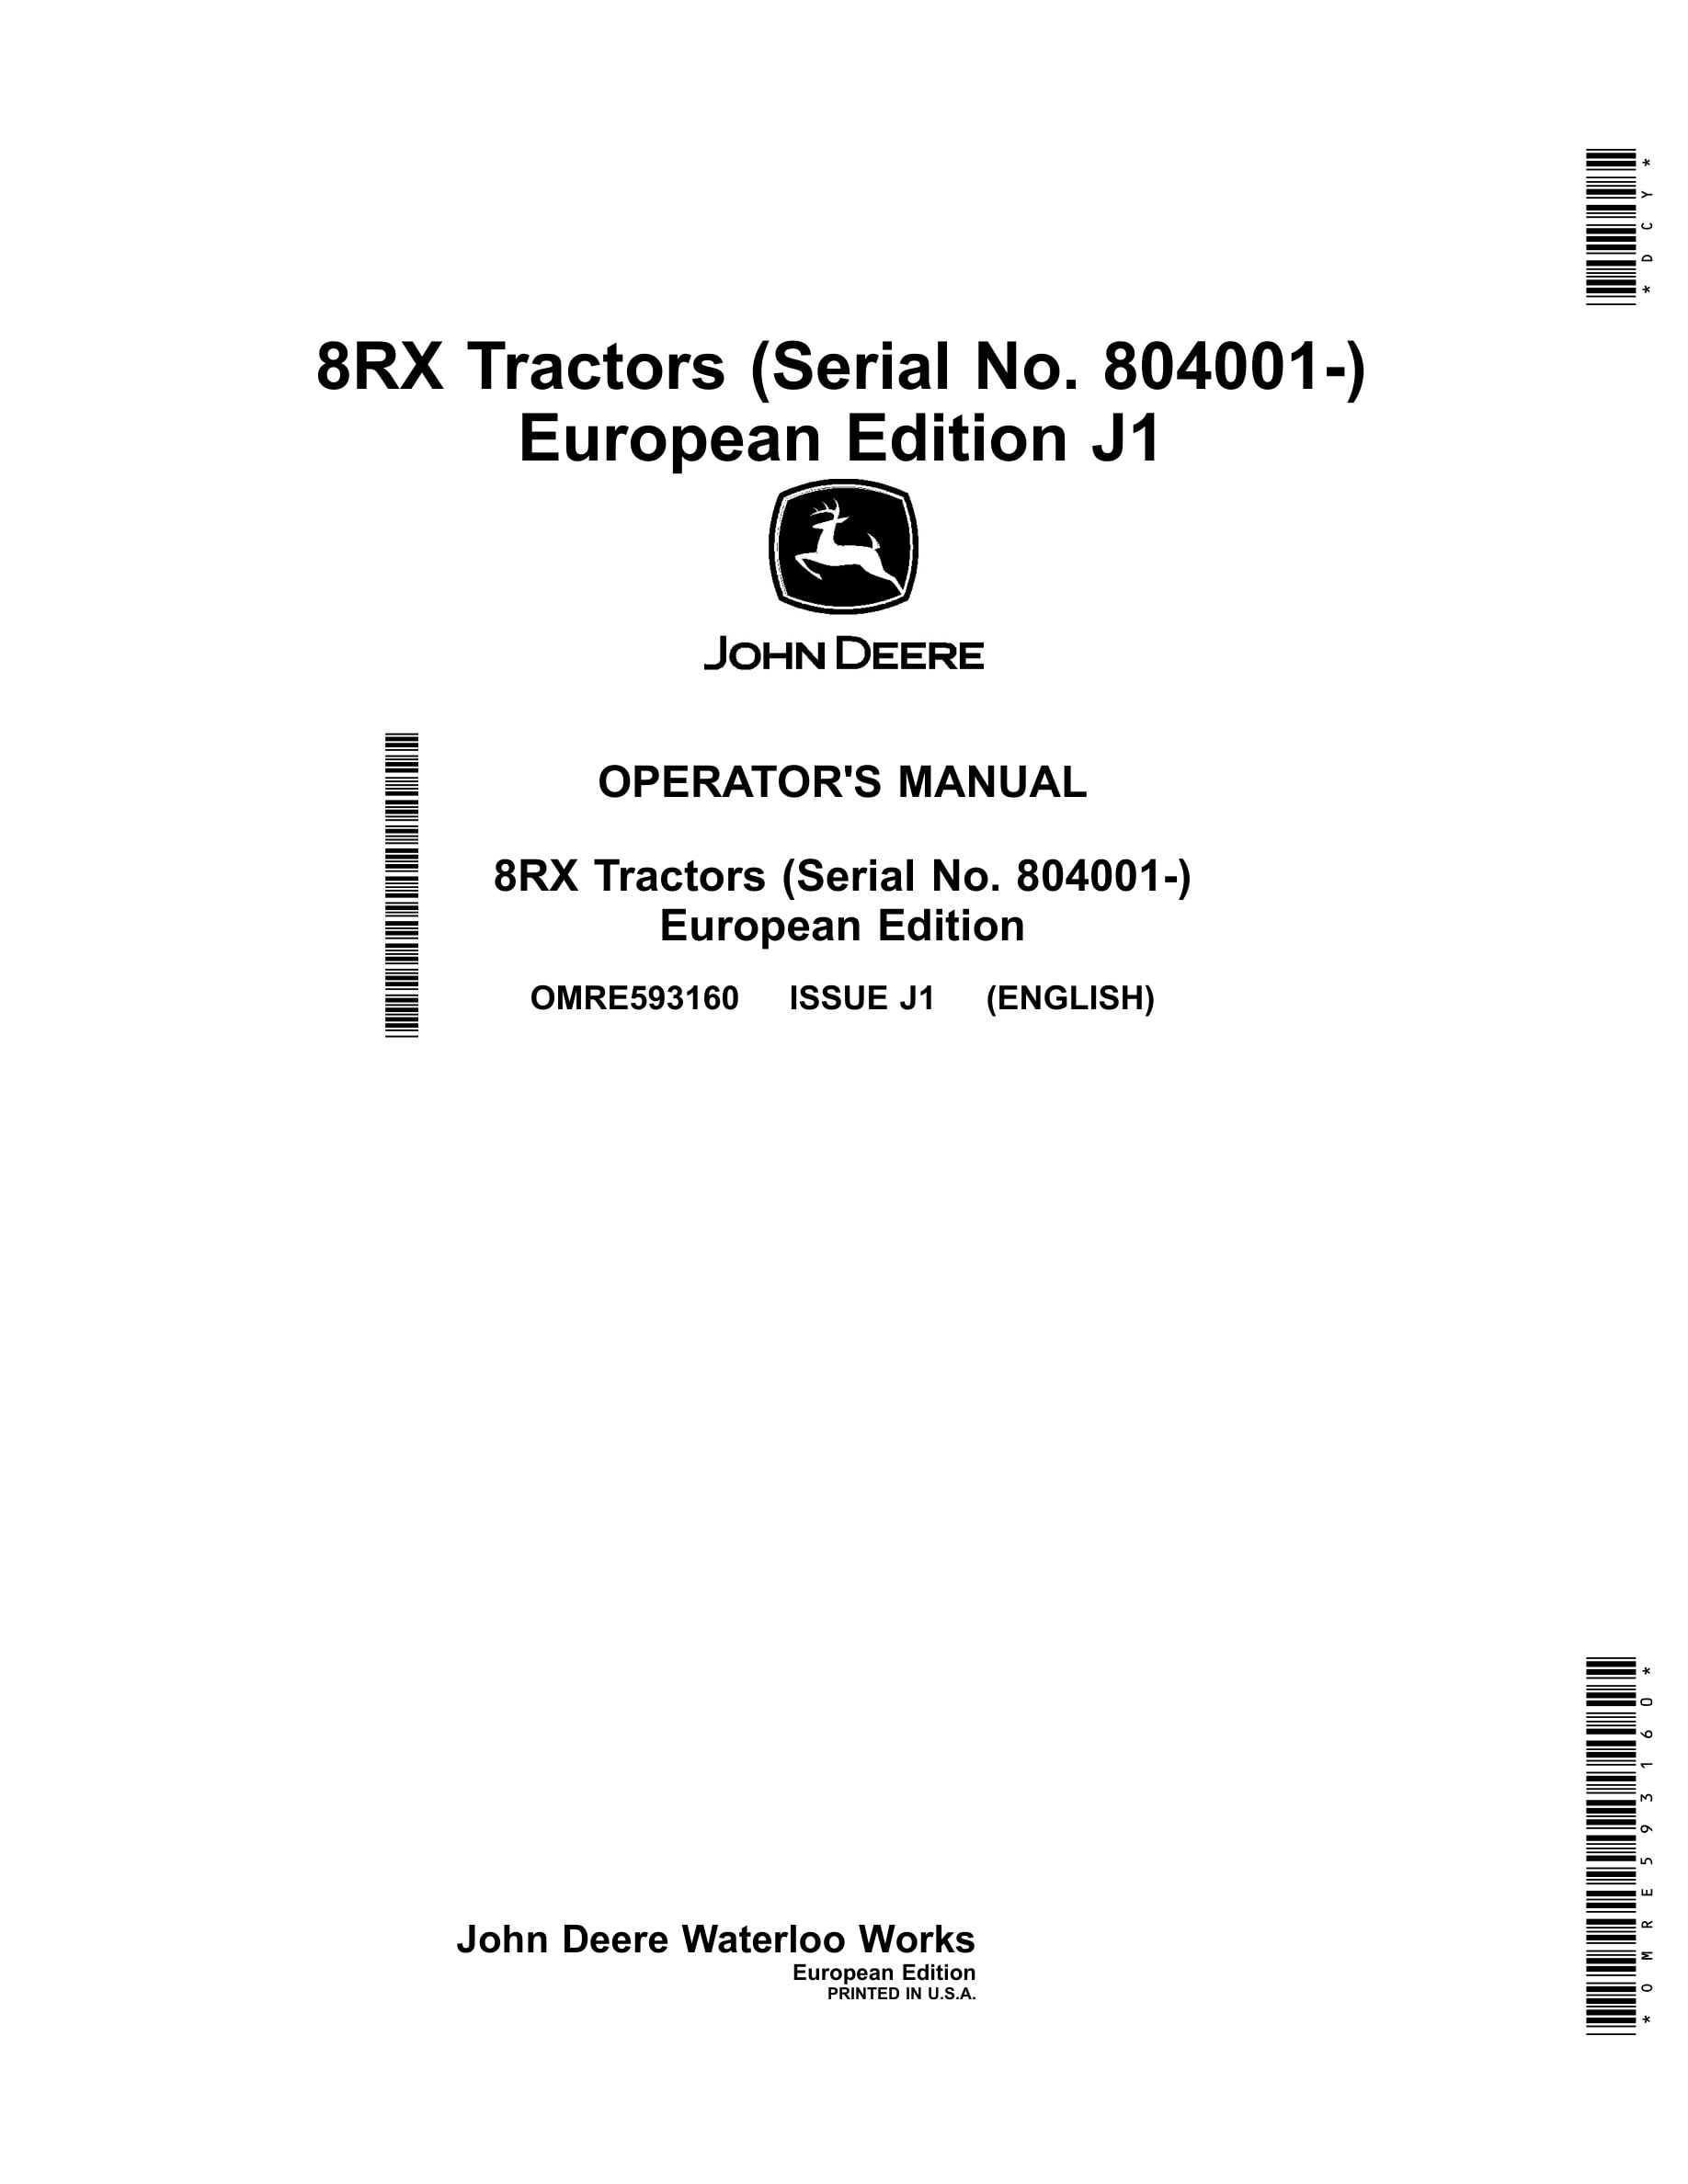 John Deere 8rt Series Tractors Operator Manuals OMRE593160-1